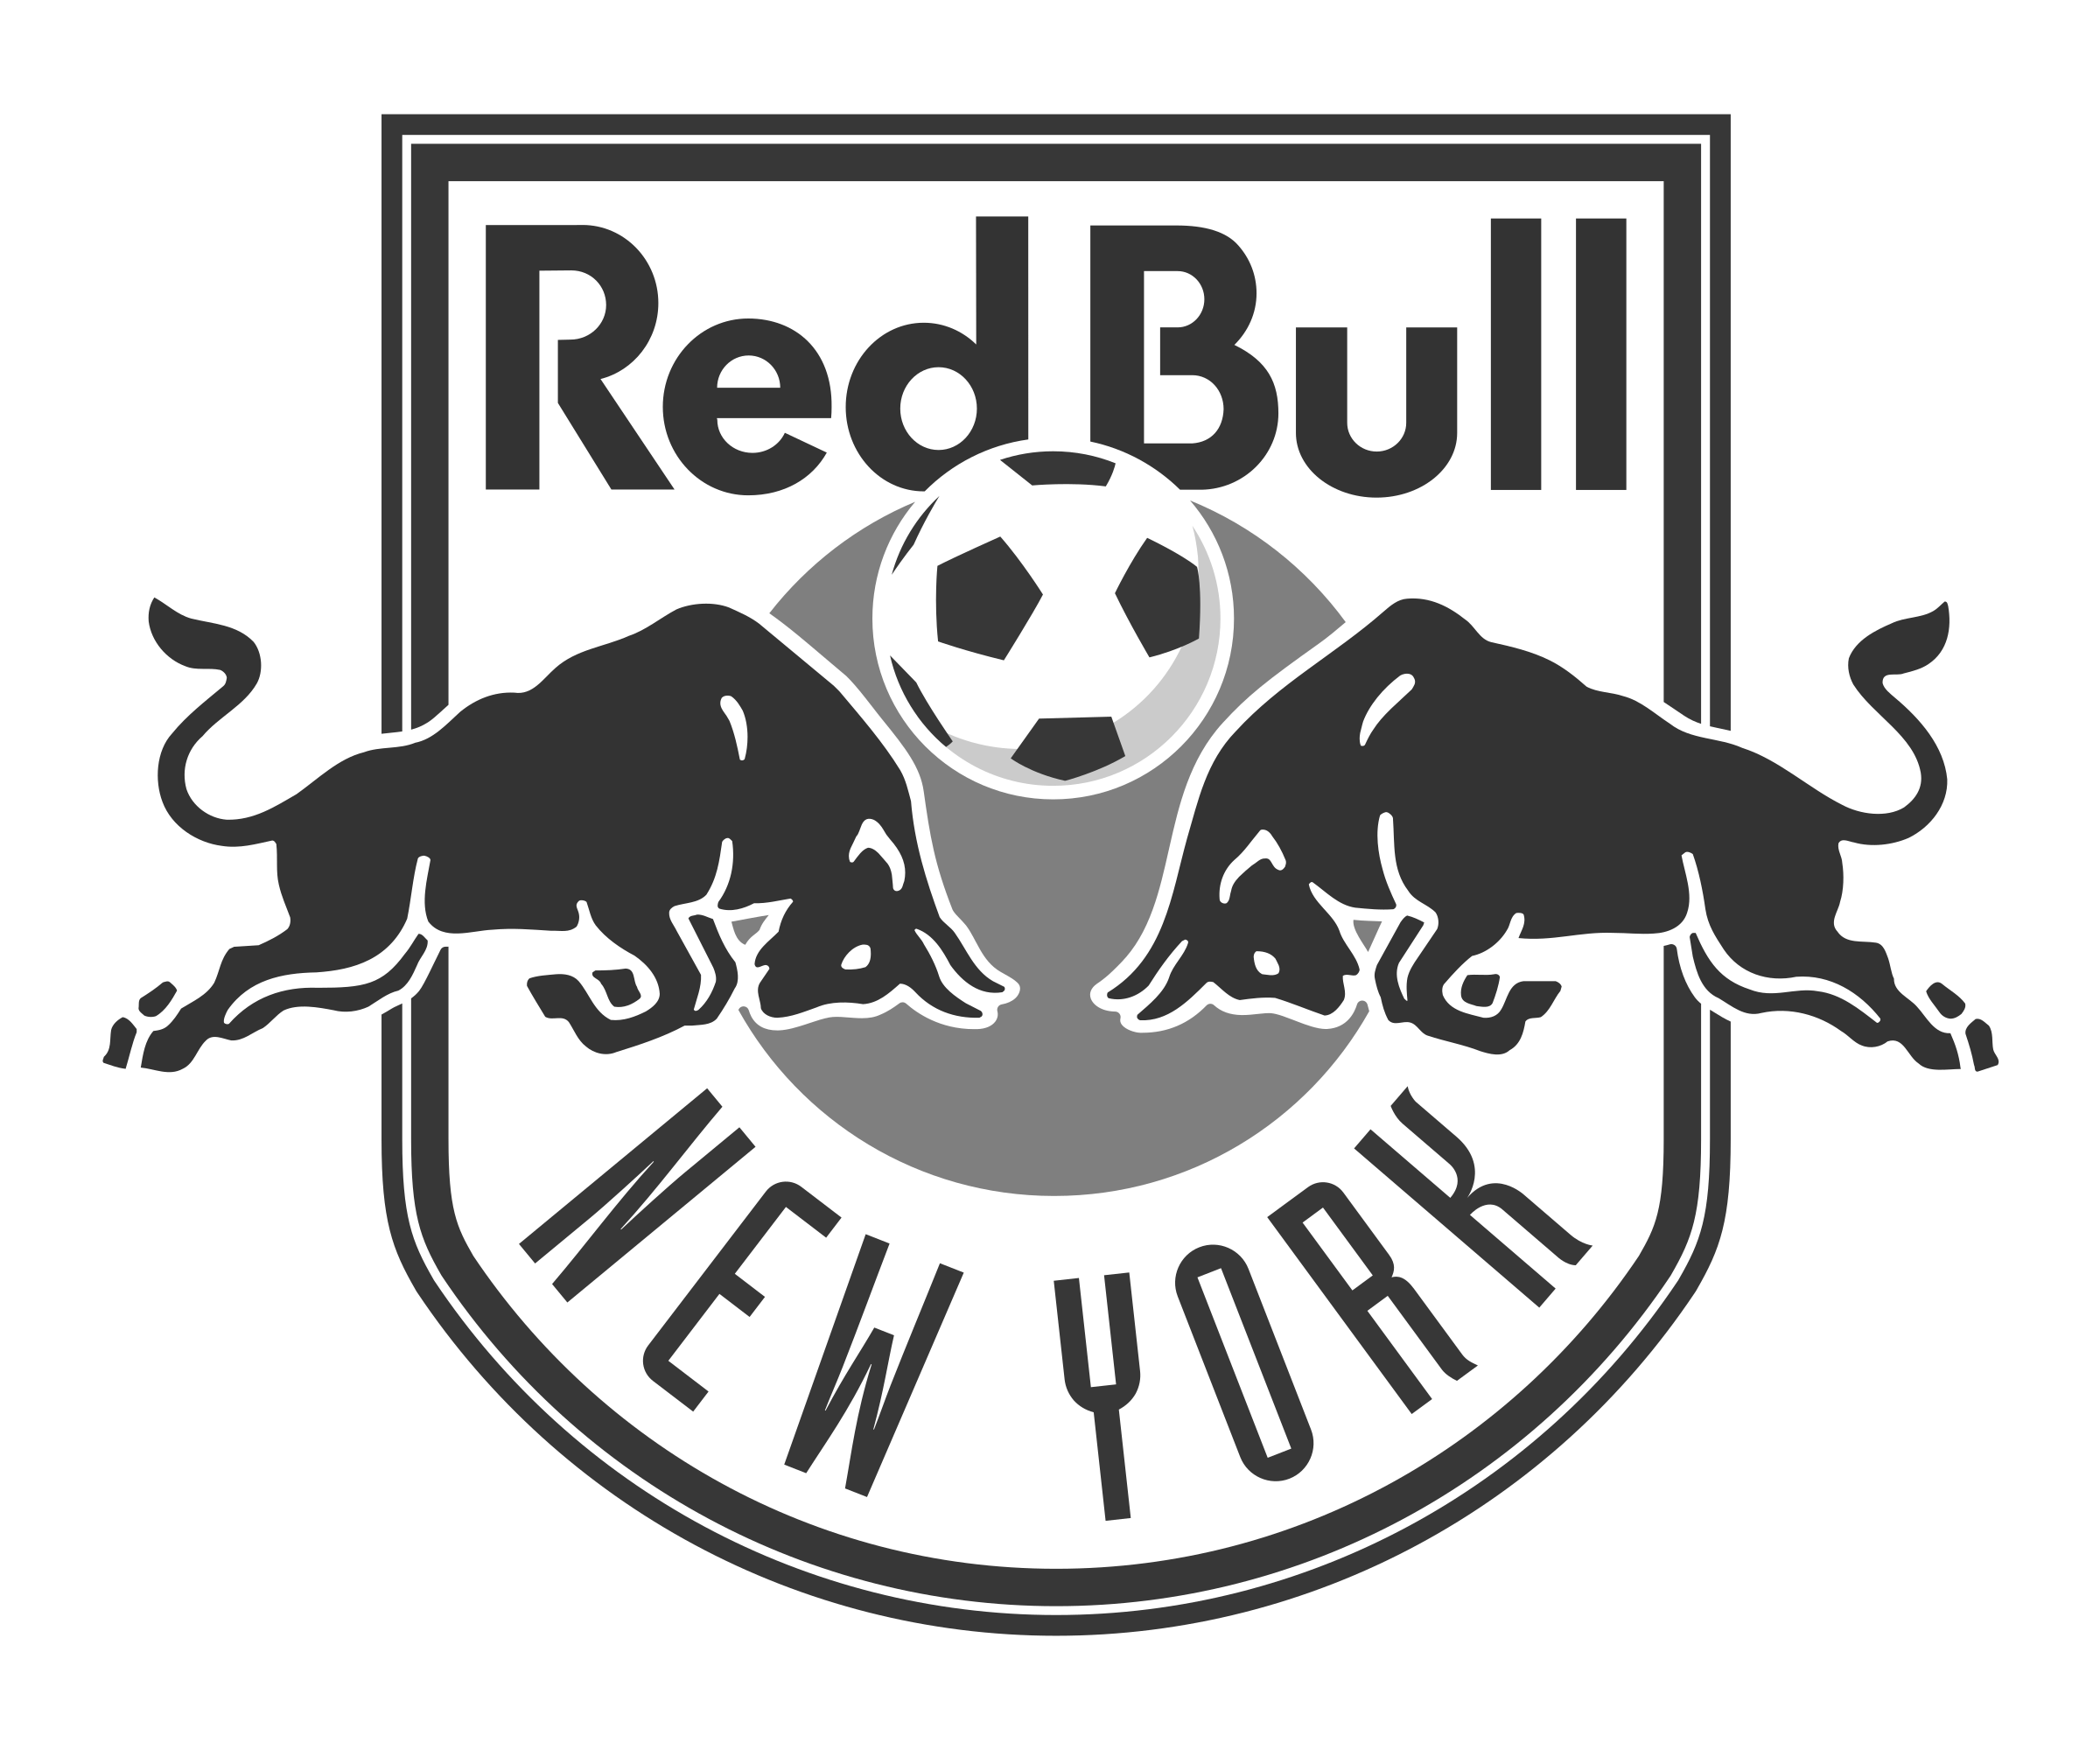 NY Red Bulls Logo - New York Red Bulls Logo PNG Transparent & SVG Vector - Freebie Supply